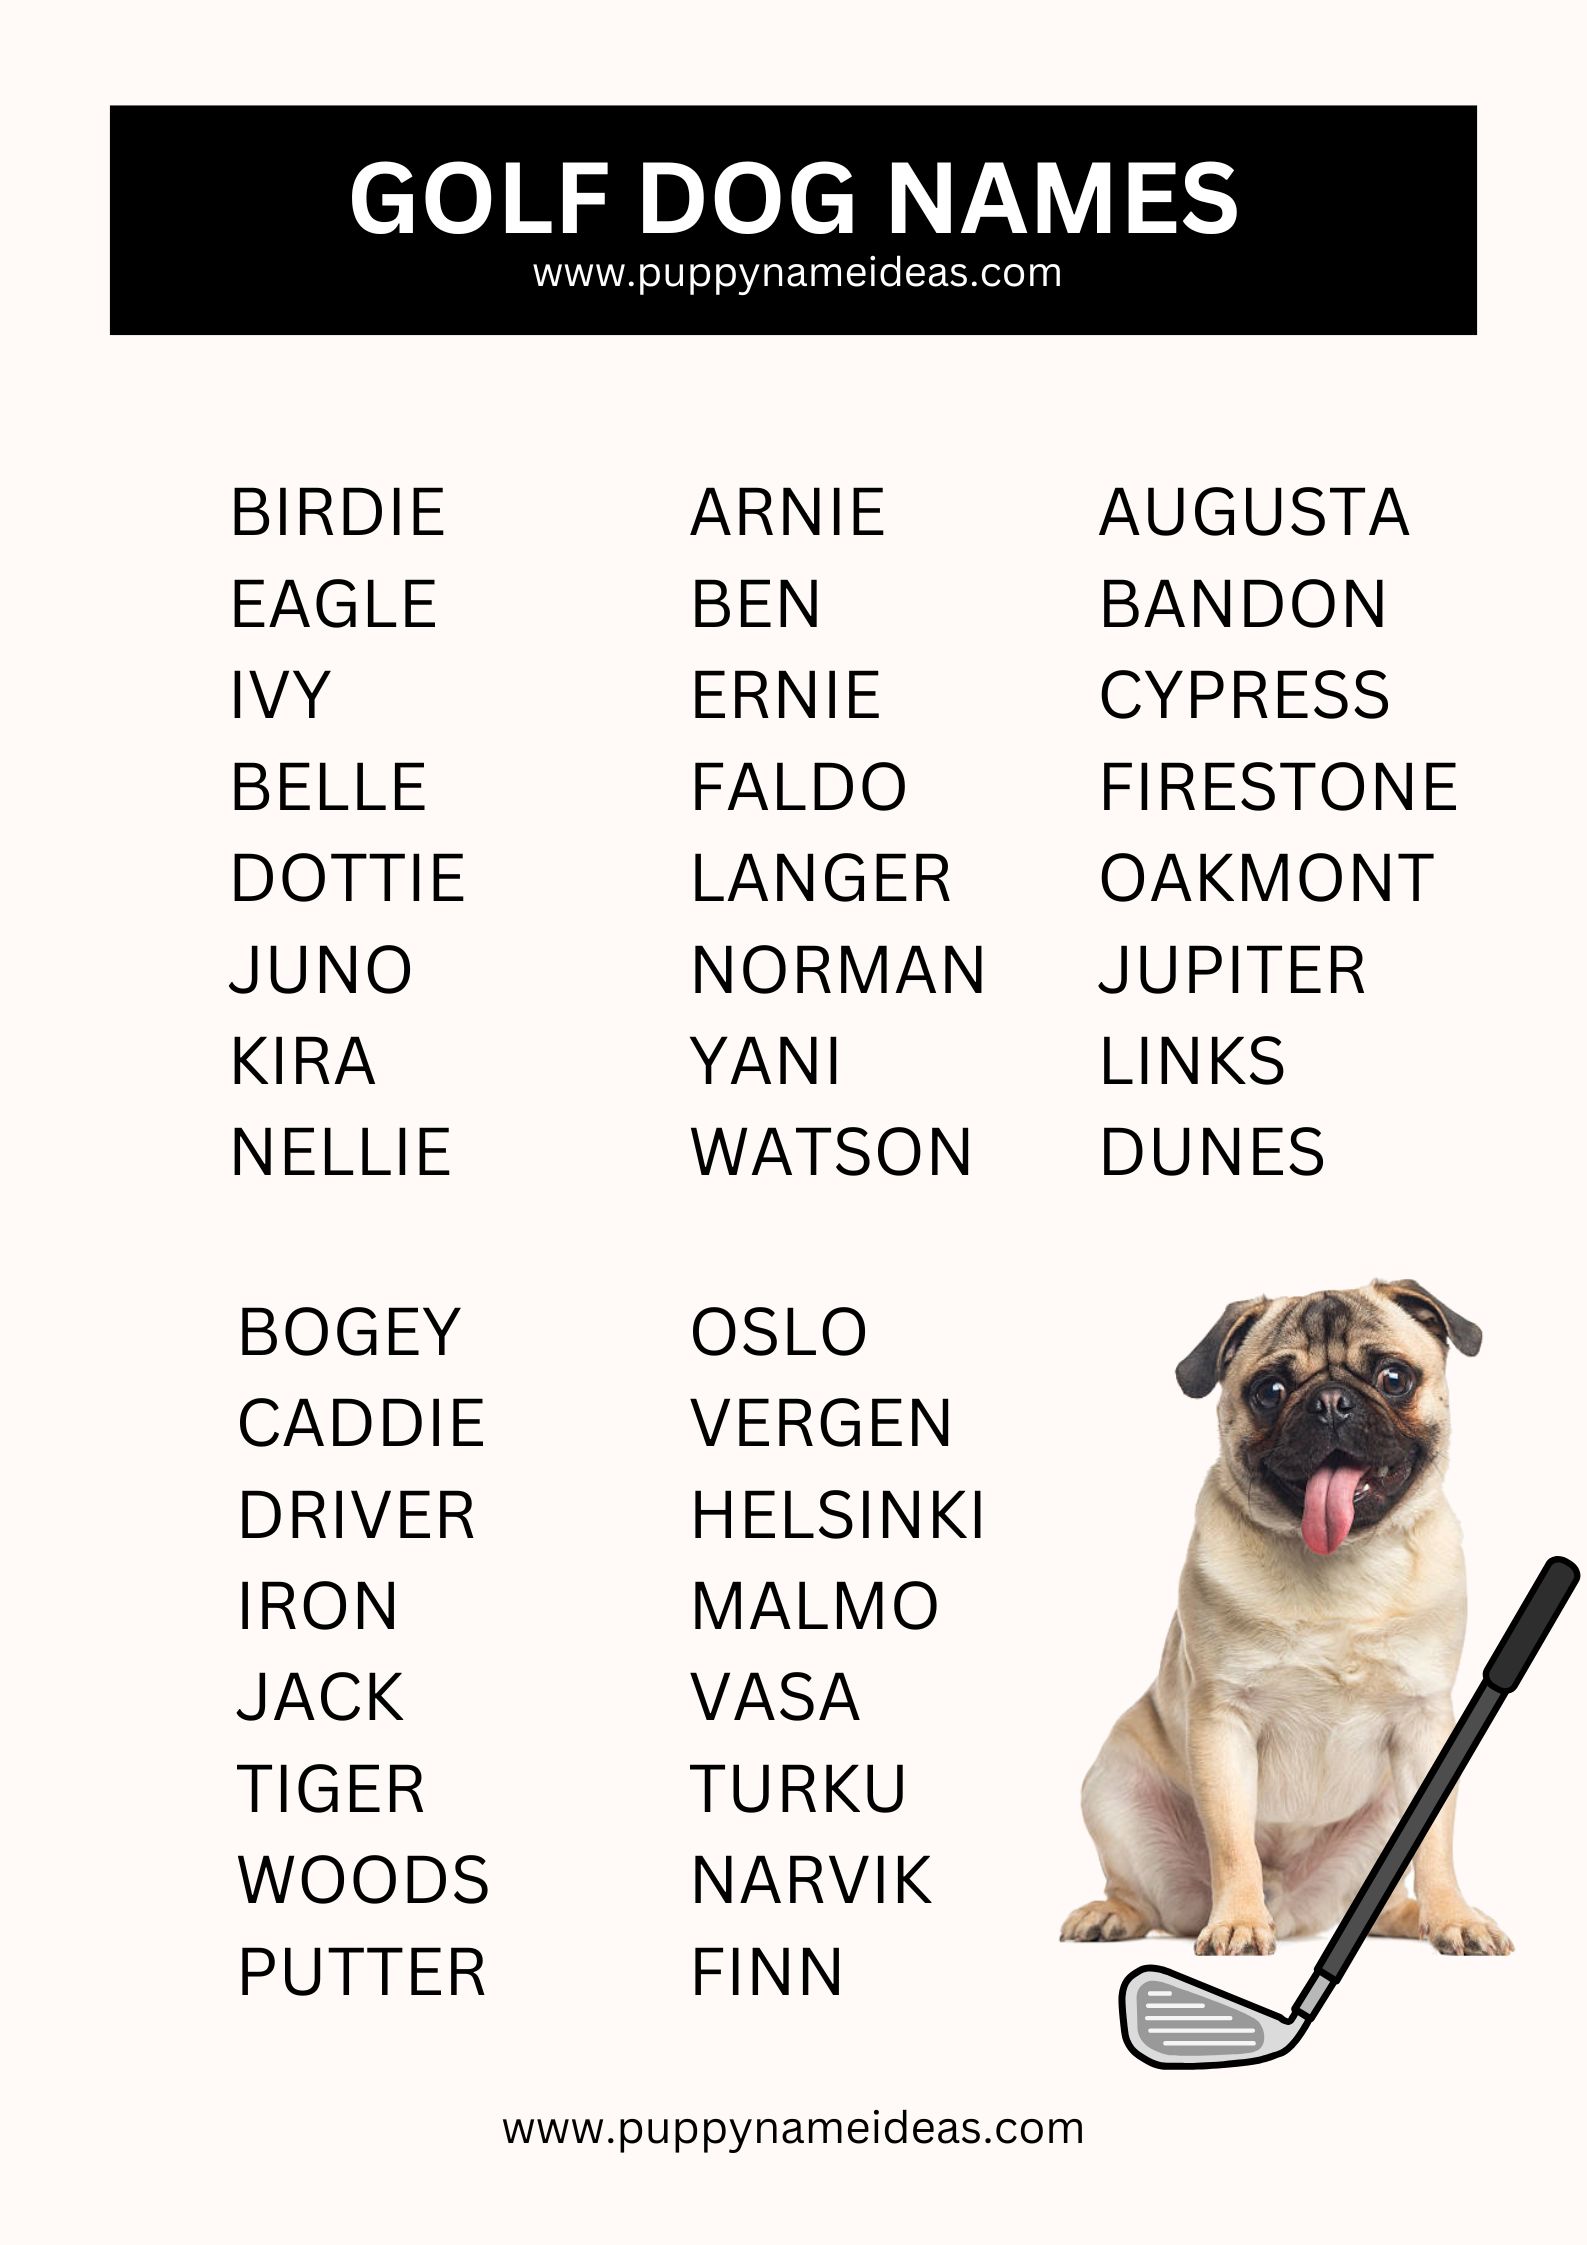 List of Golf Dog Names